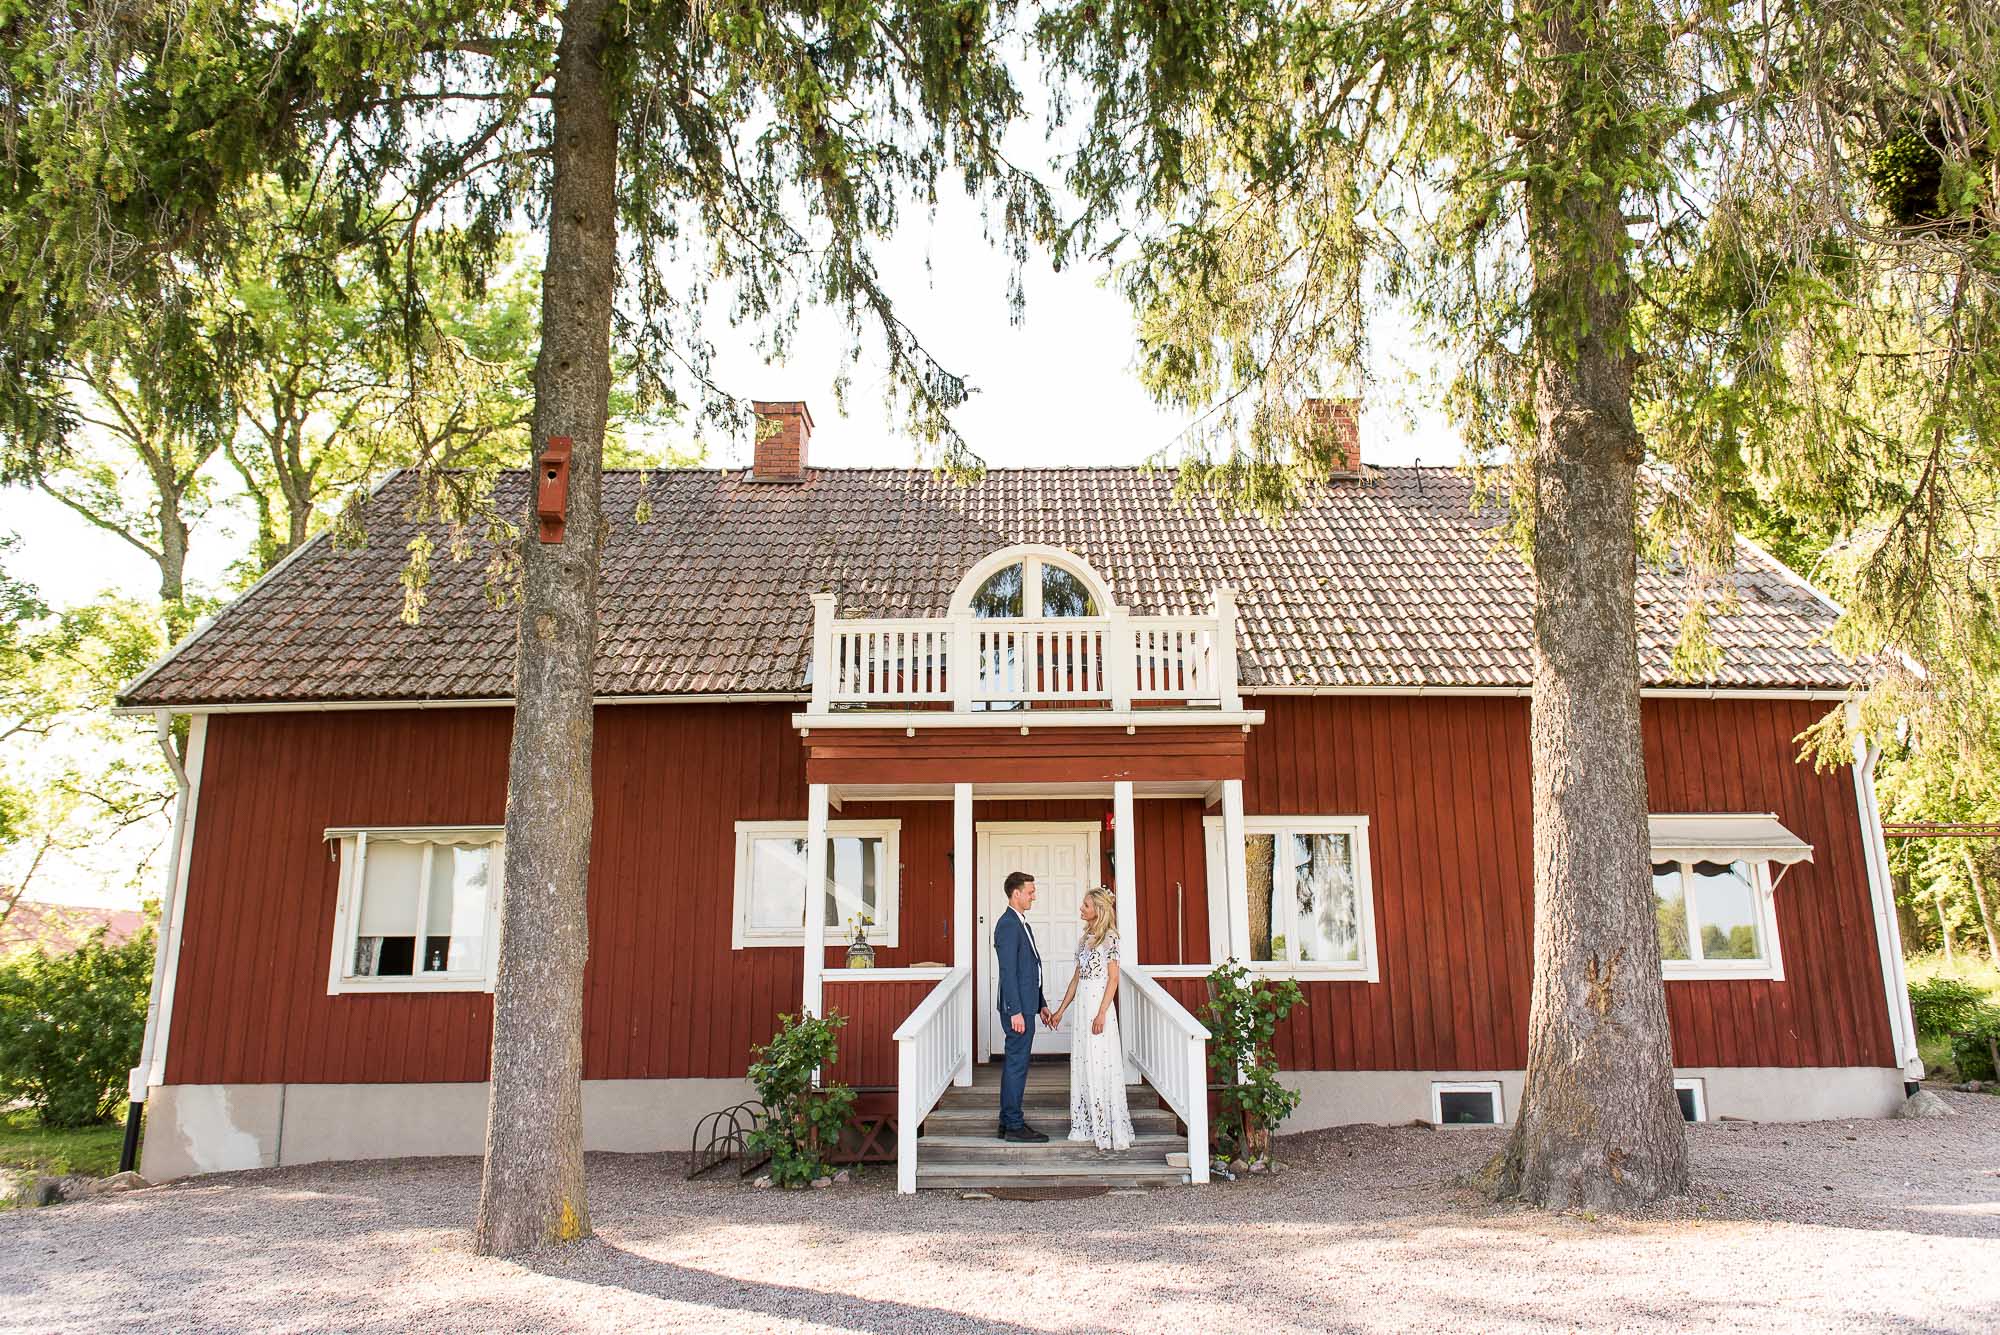 Swedish Wedding - Kroksta Gard Wedding - Natural and Candid Couples Portrait With Traditional Red Swedish Barn